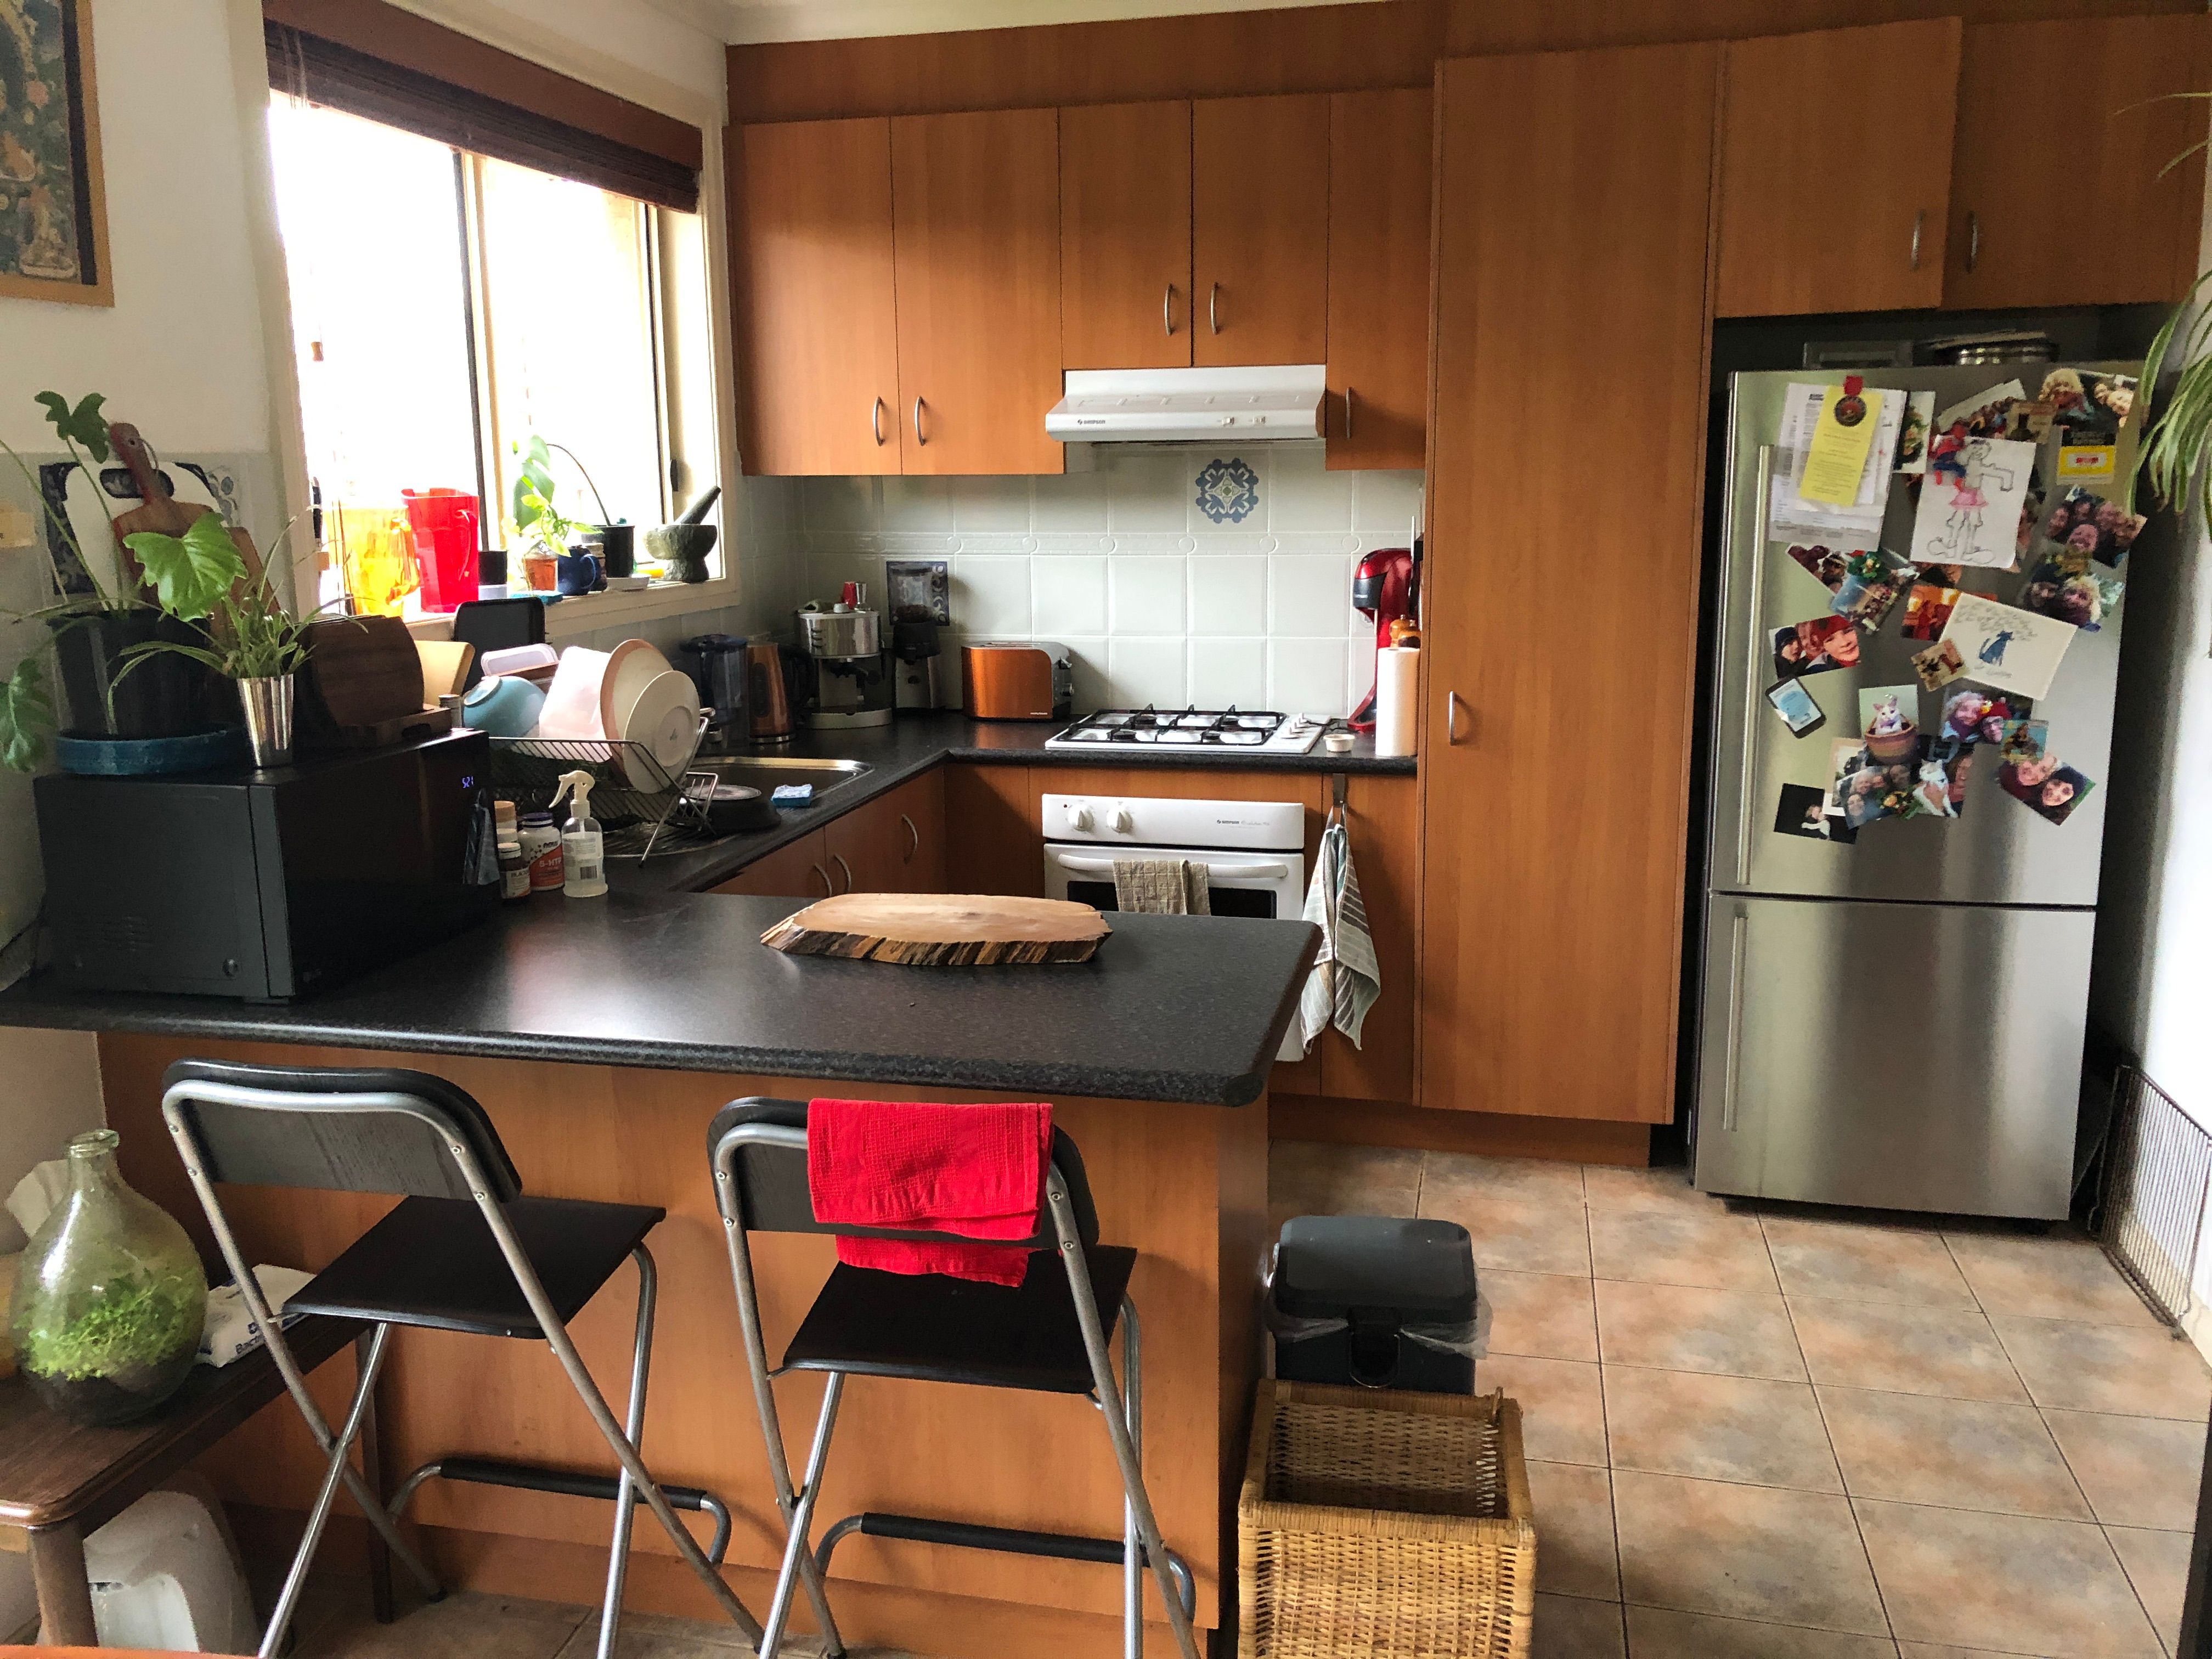 Small kitchen upgrade | Bunnings Workshop community